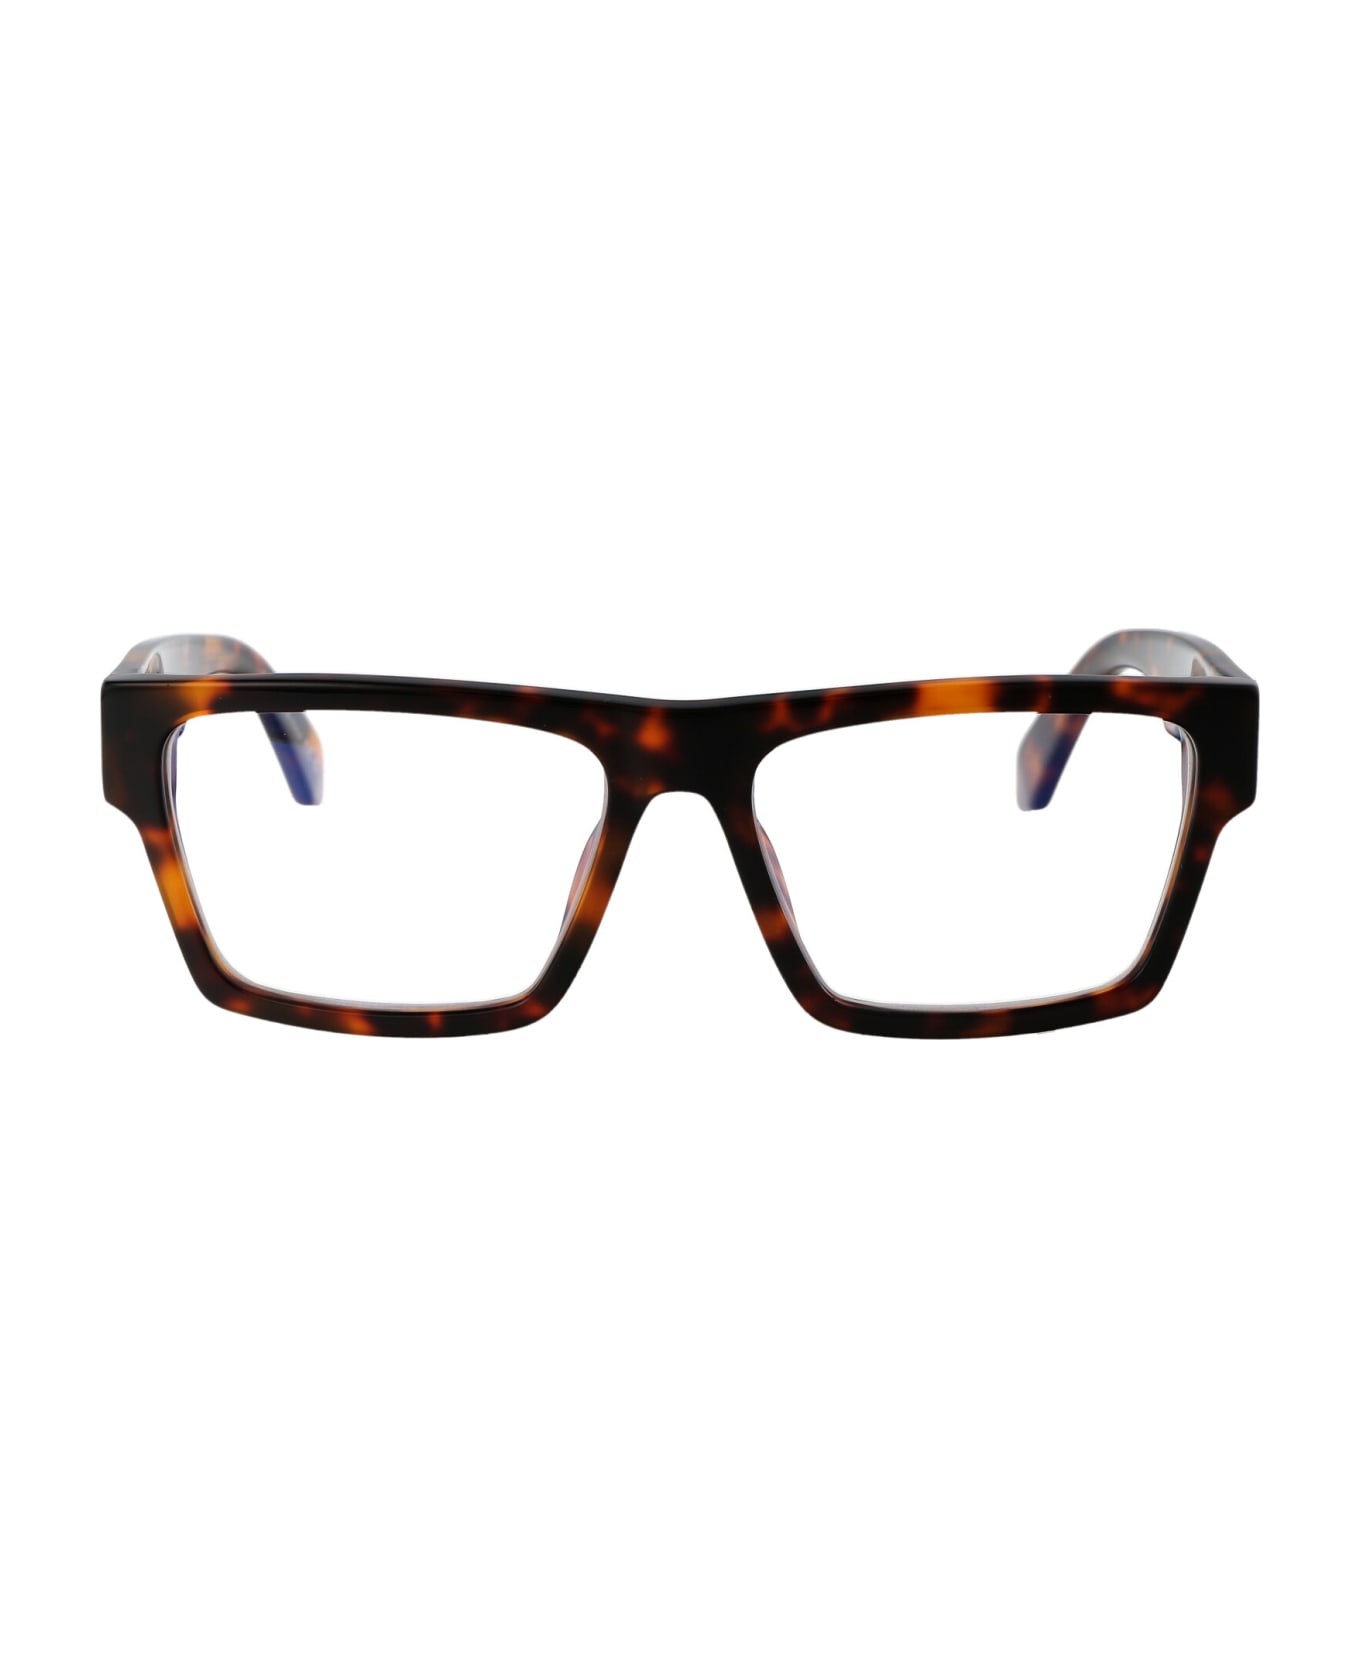 Off-White Optical Style 46 Glasses - 6000 HAVANA アイウェア